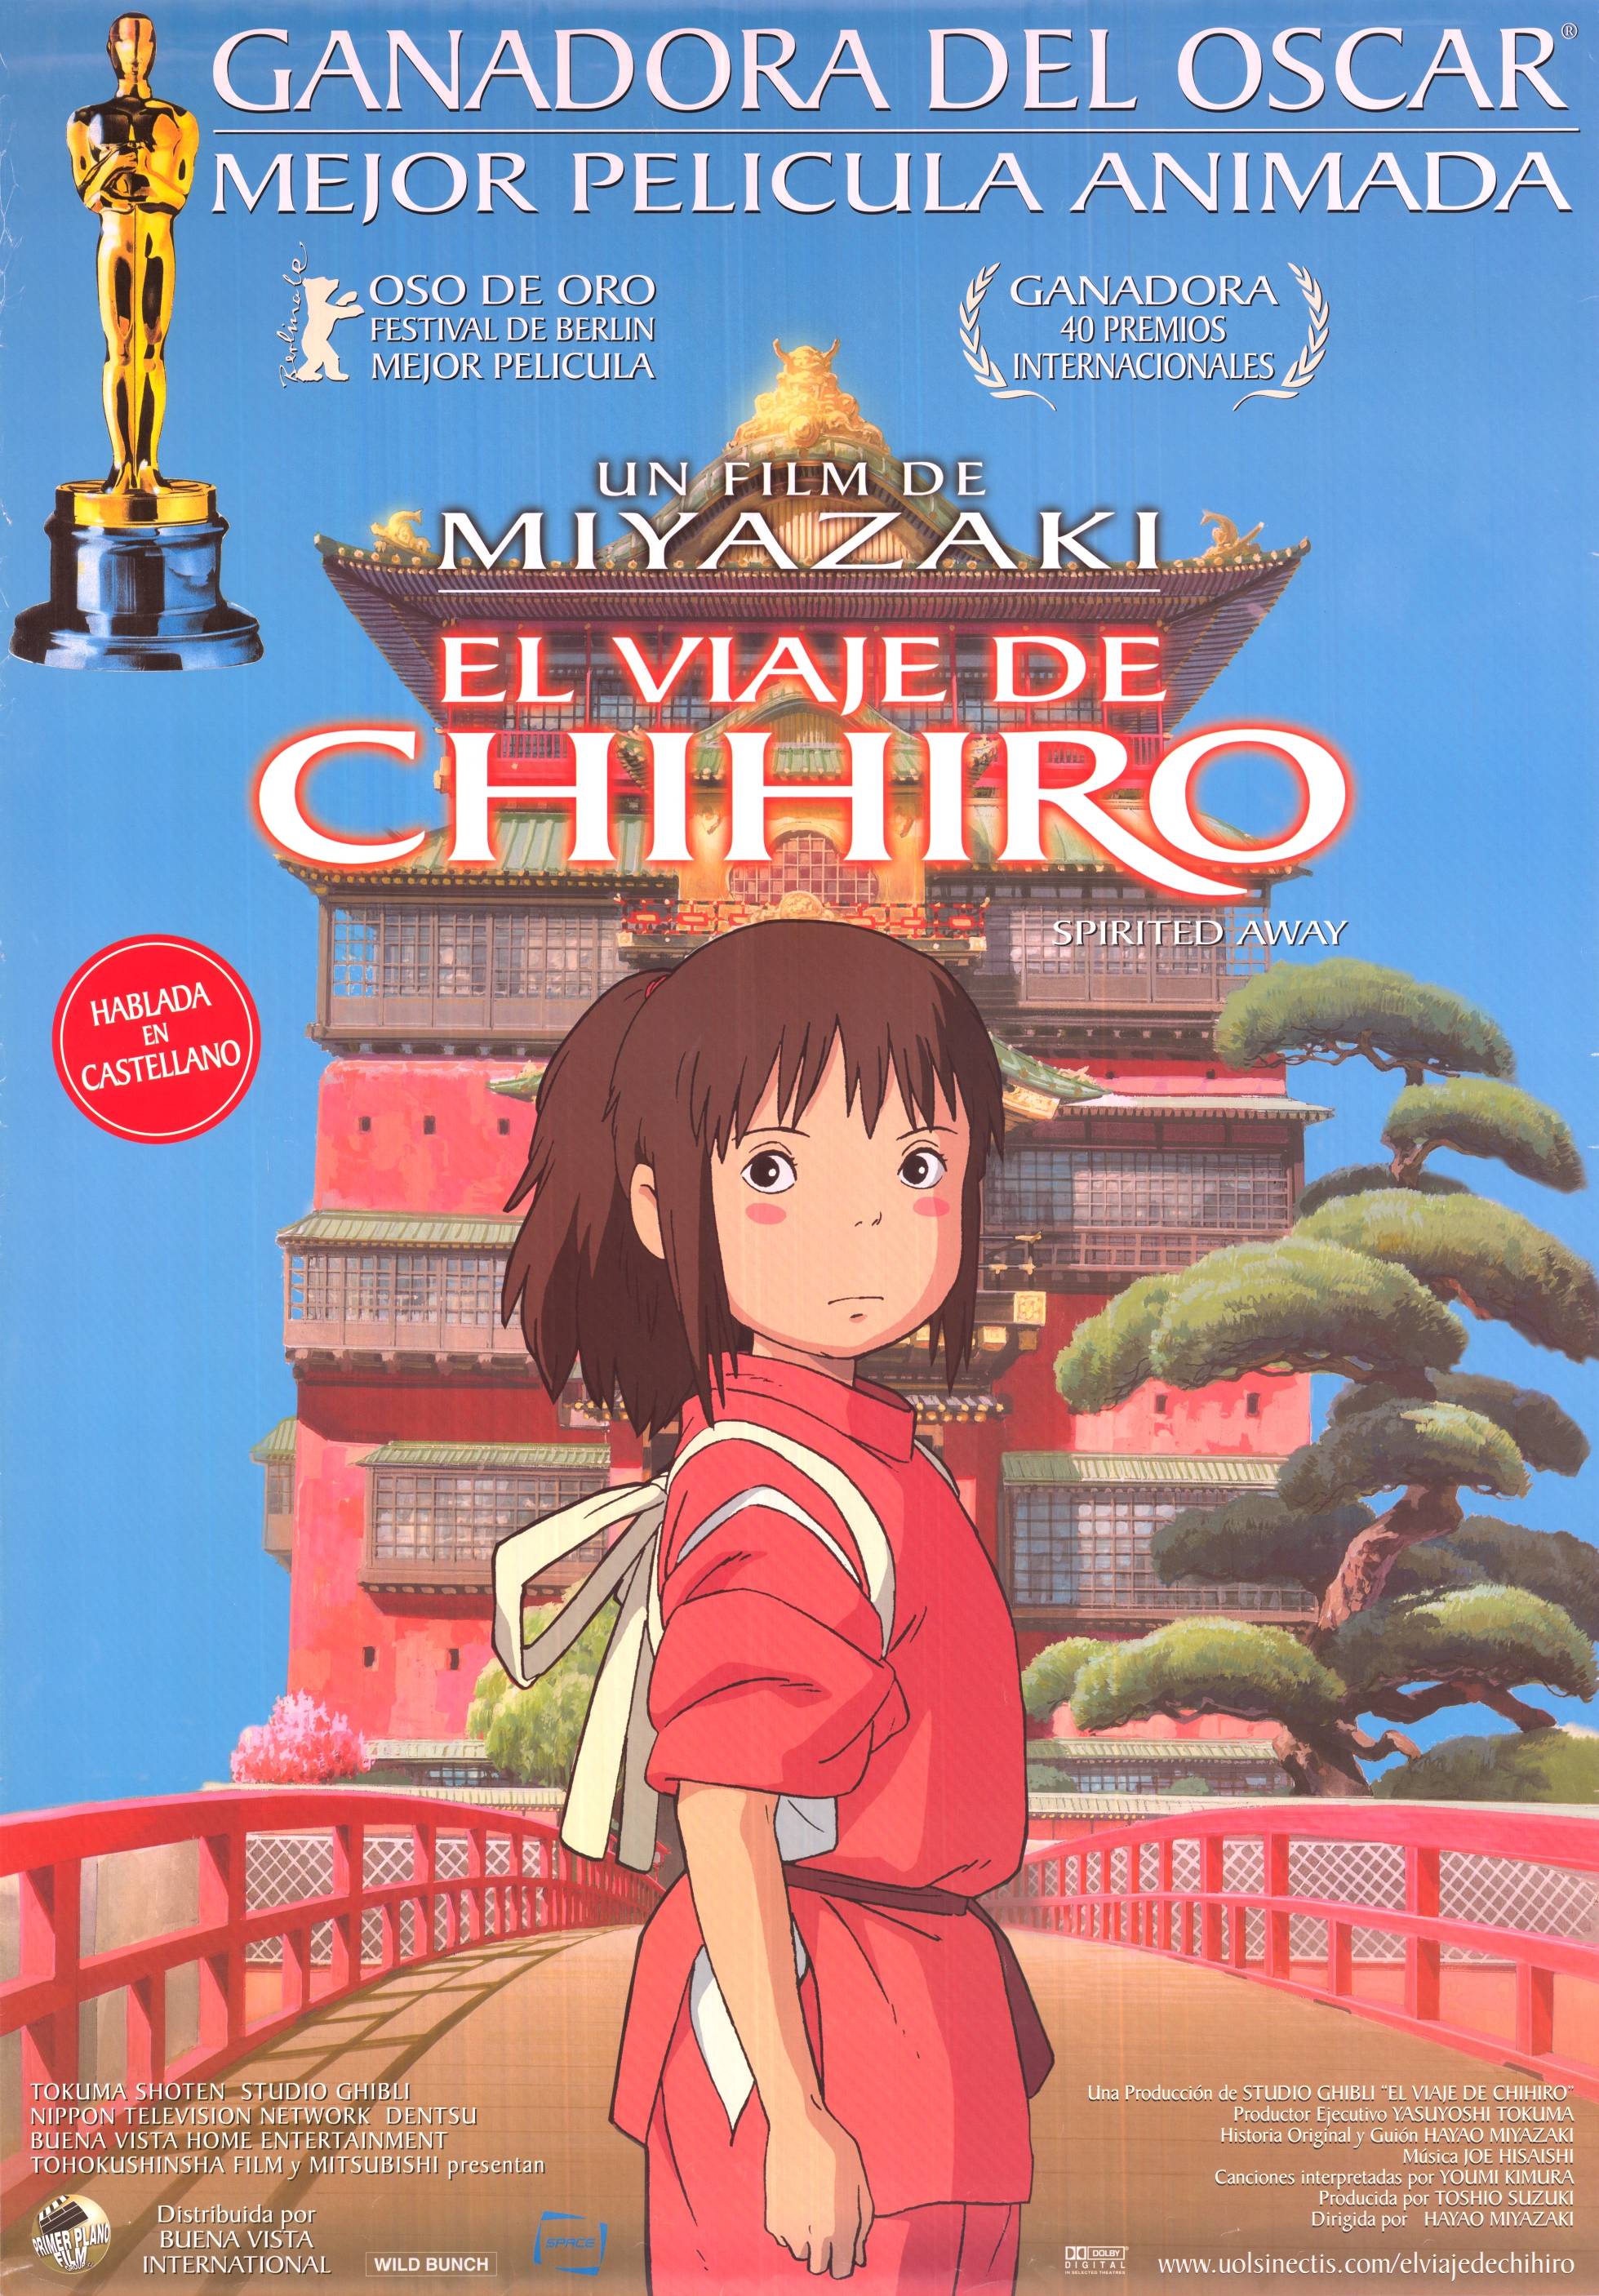 El castillo ambulante: la vida después de Chihiro